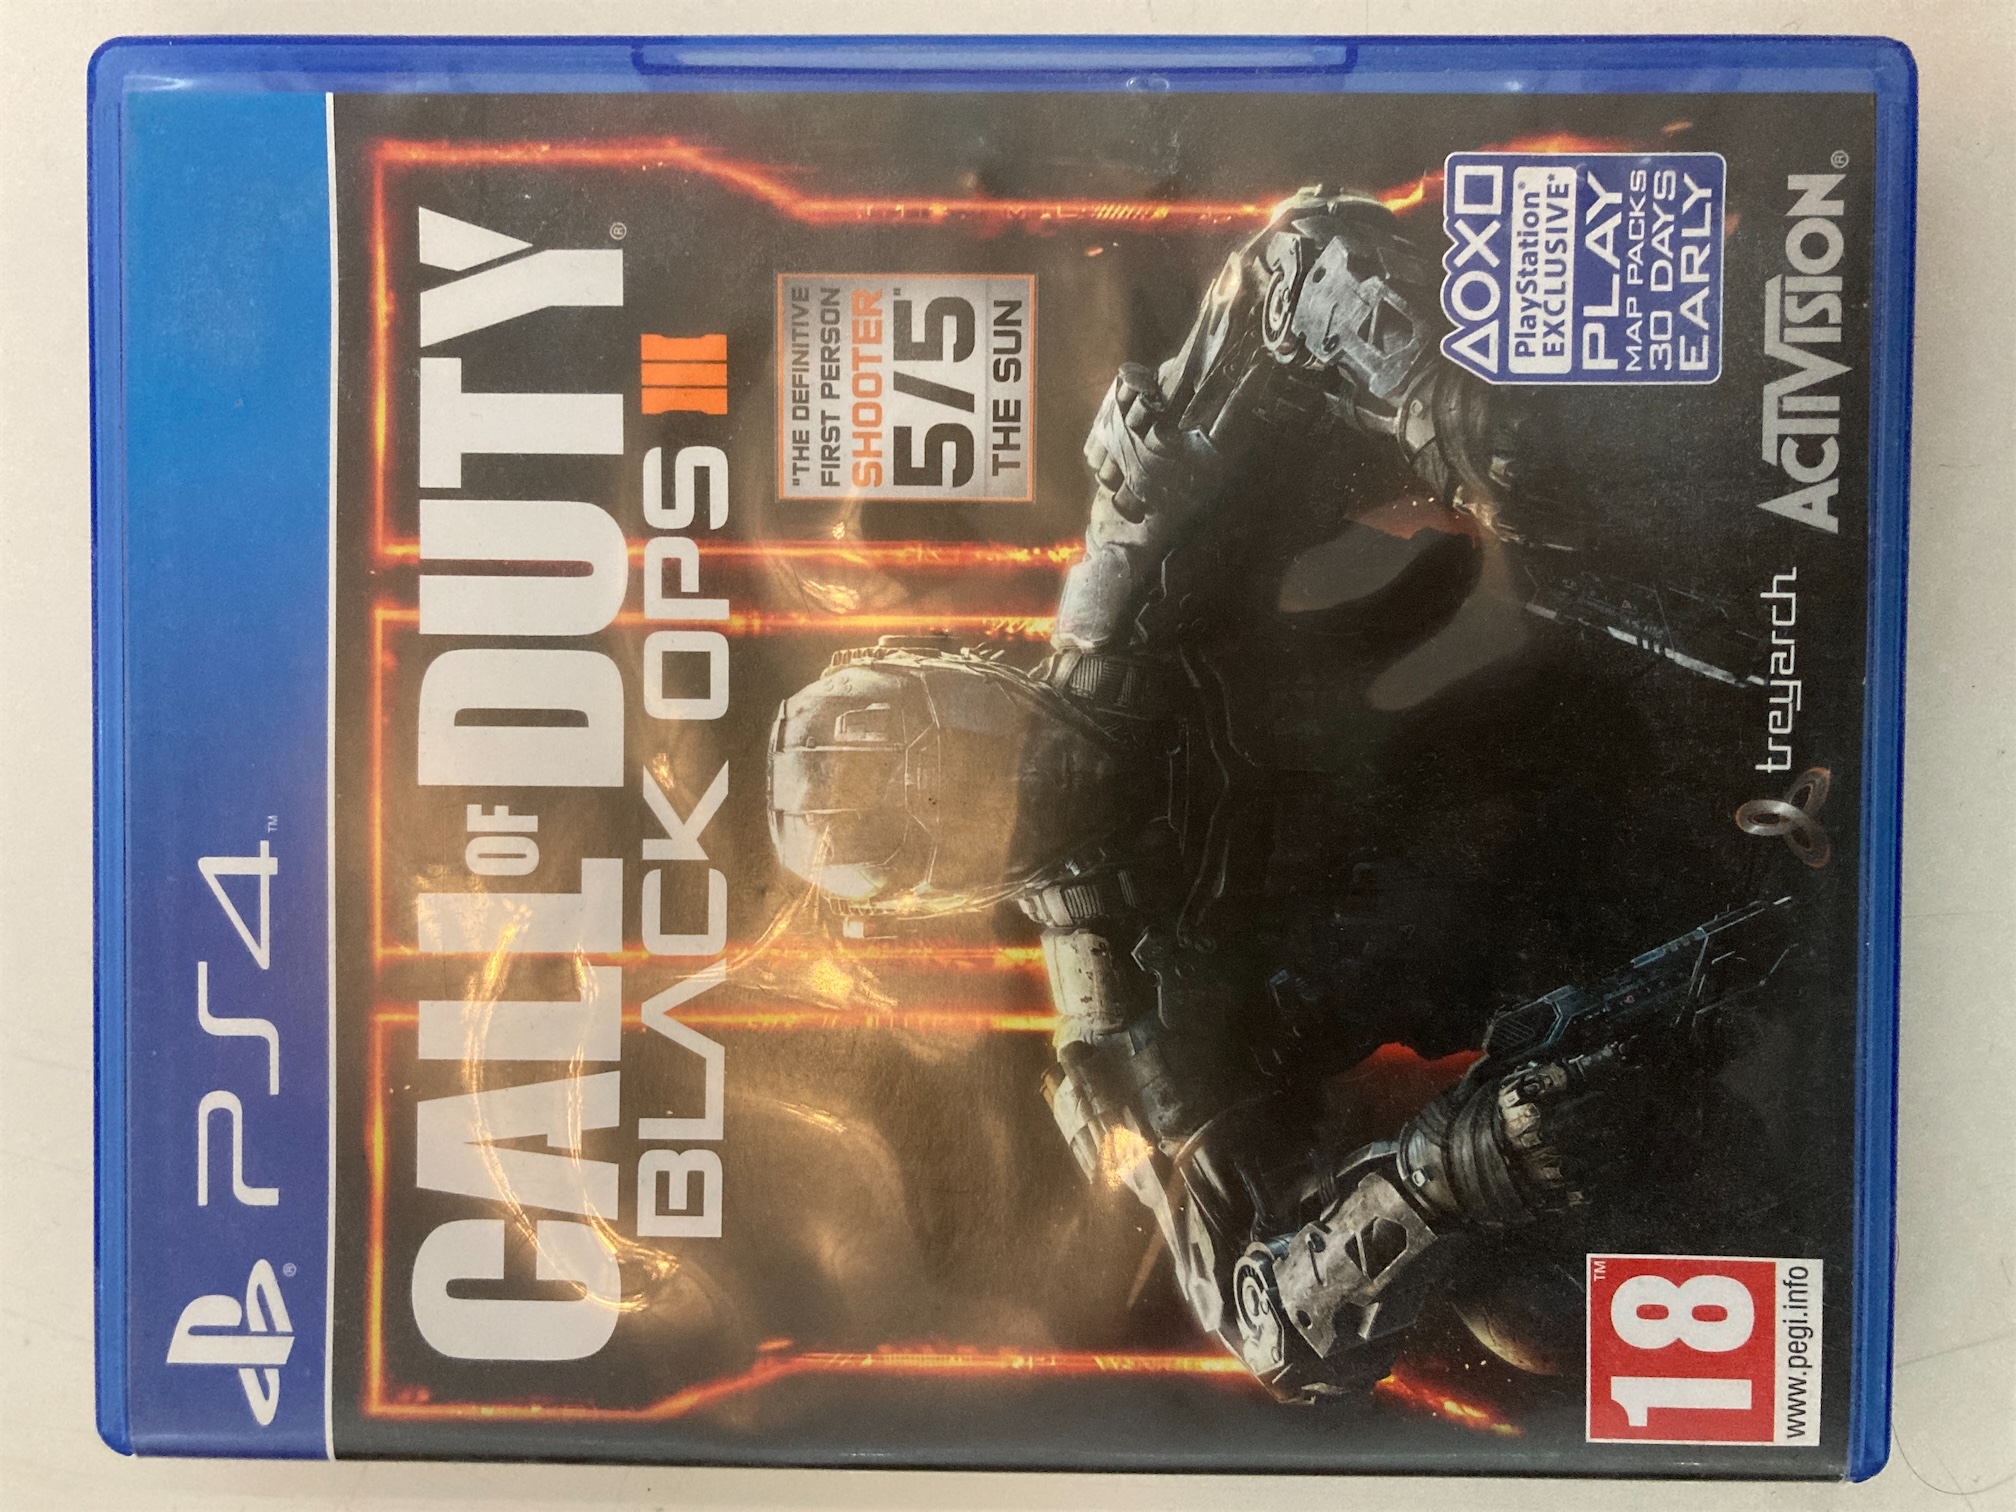 consolas y videojuegos - Call of Duty: Black Ops lll